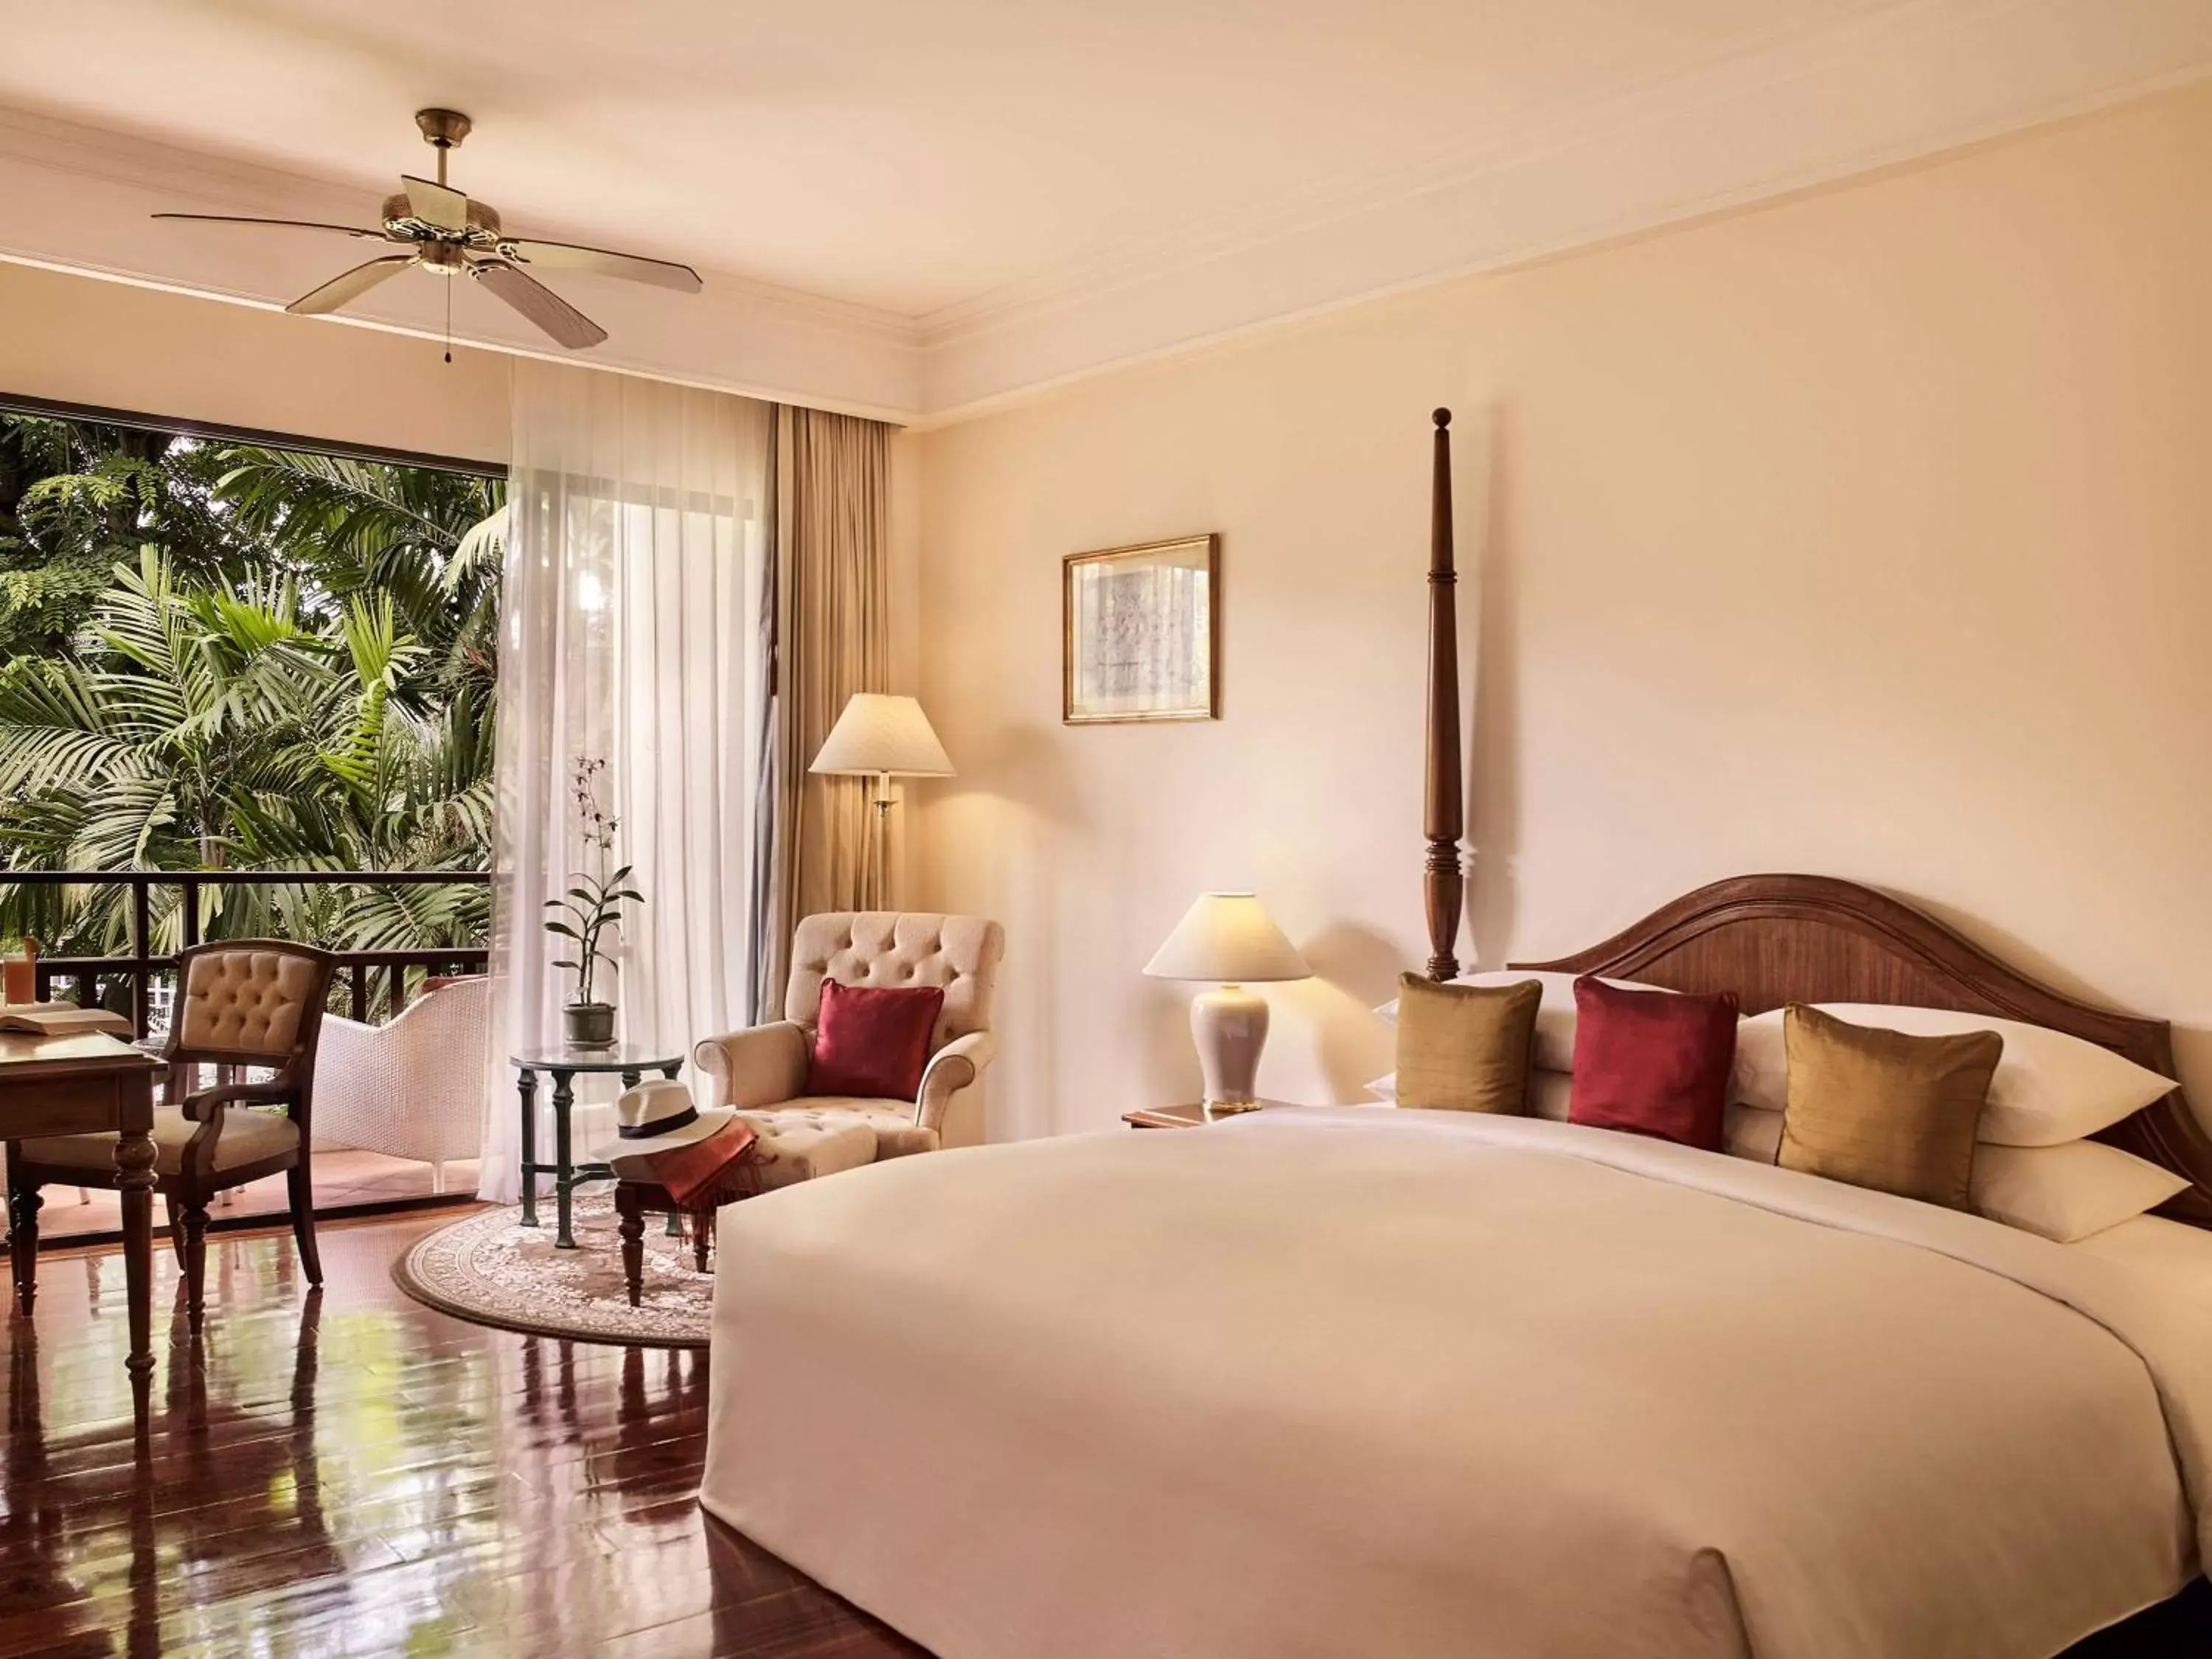 Luxury King Room with Terrace in Sofitel Angkor Phokeethra Golf & Spa Resort